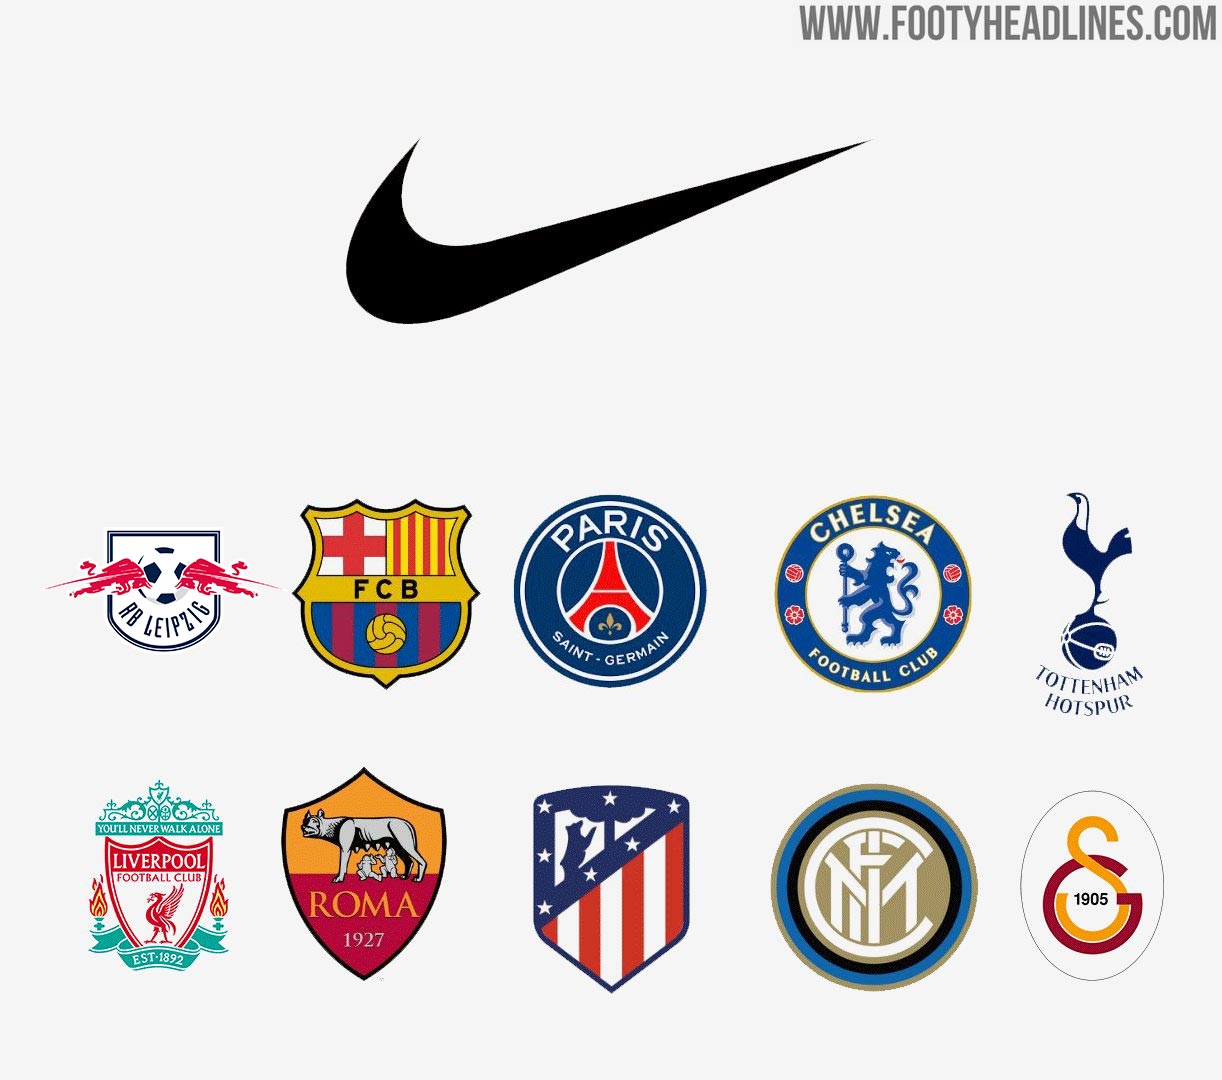 Alojamiento Suradam Ambiguo Nike's Pyramid Of Football Kit Sponsorship - Elite, Premium, Standard,  Third Party & Not Affiliated - Footy Headlines